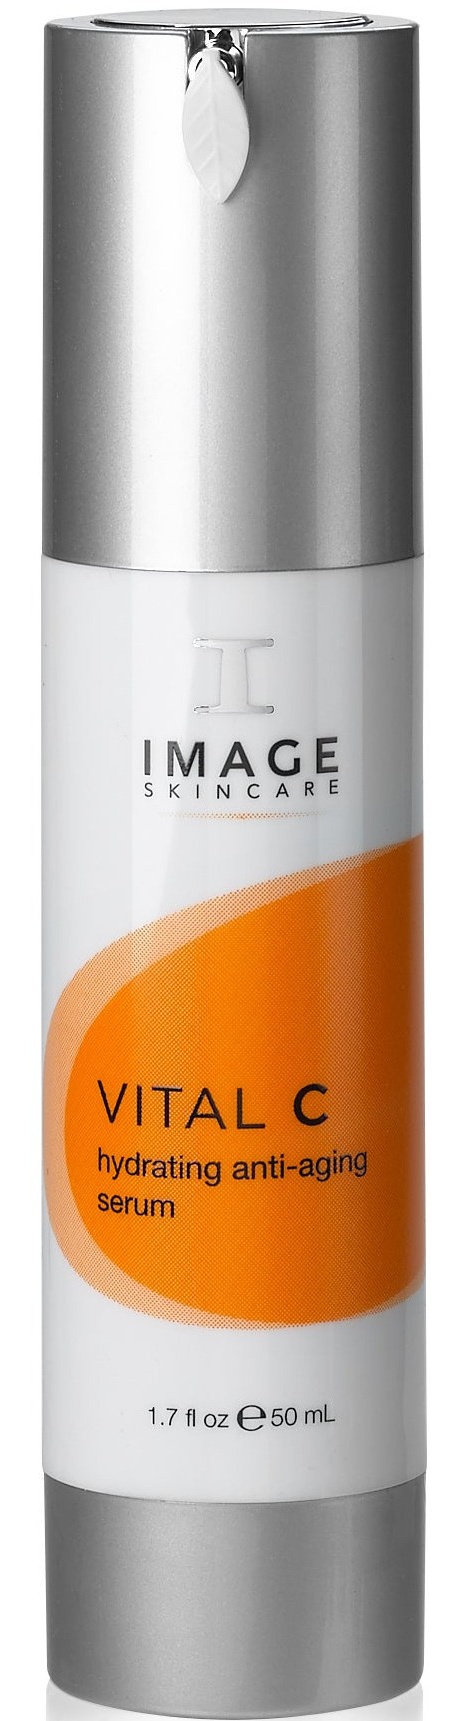 Image Skincare Vital C Hydrating Anti Aging Serum